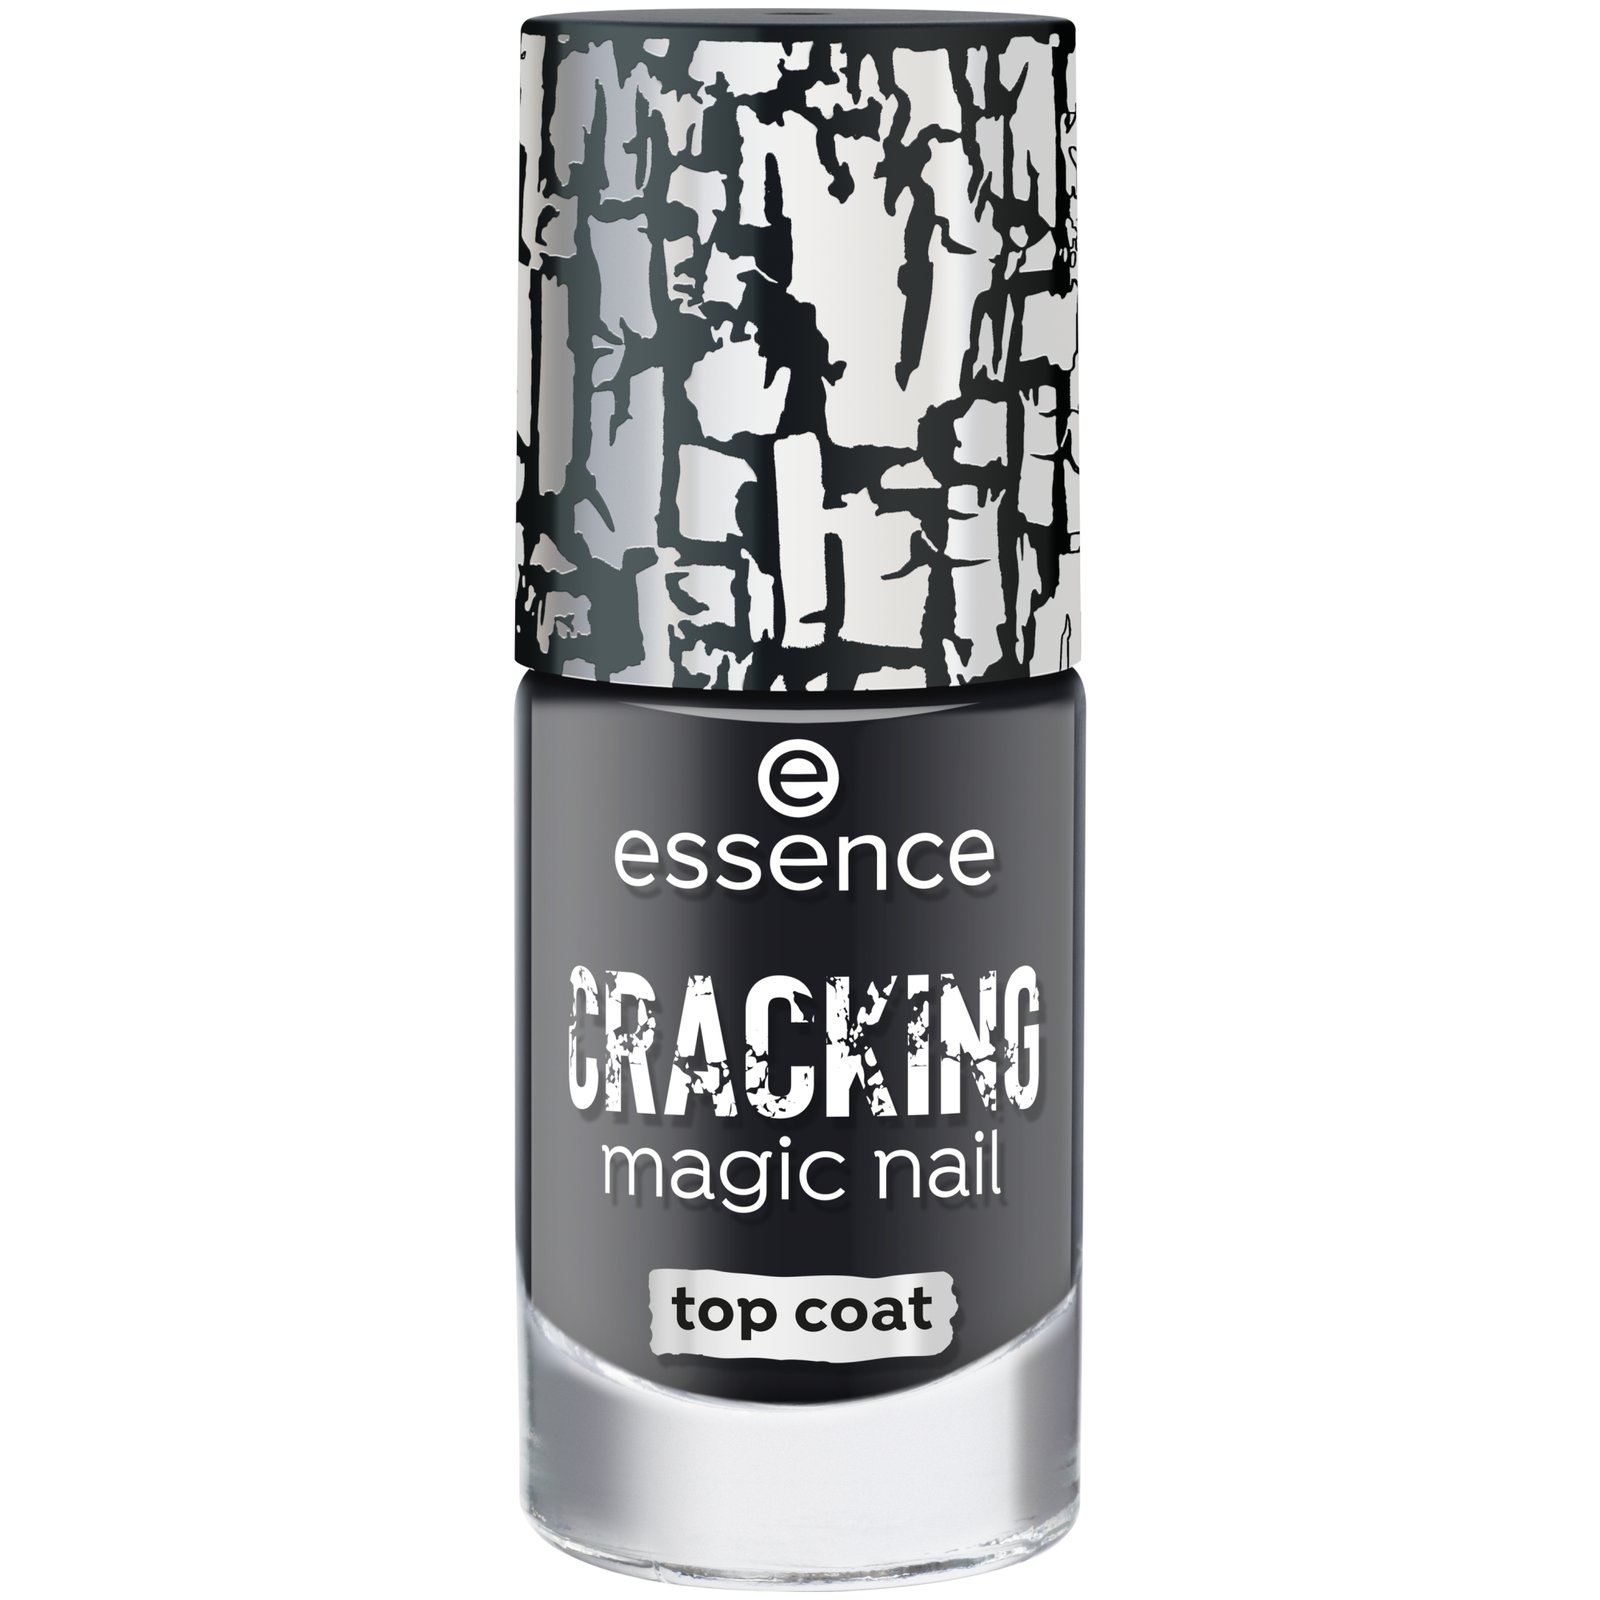 essence CRACKING magic nail top coat 01 8ml